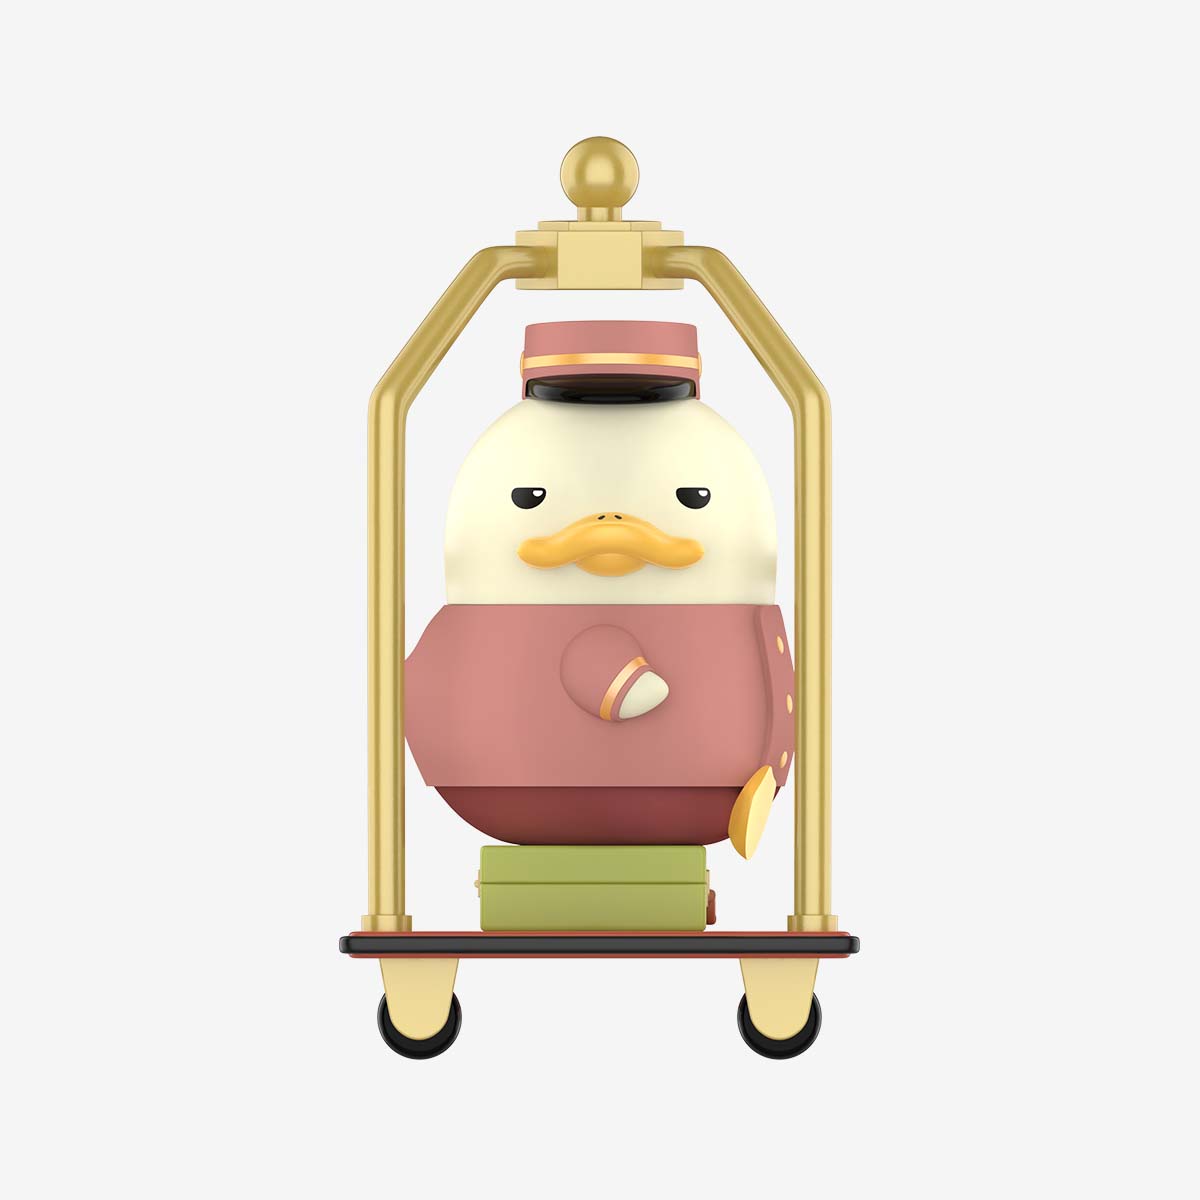 【New】Pop Mart: Duckoo The Grand Duckoo Hotel Series Blind Box Random Styles